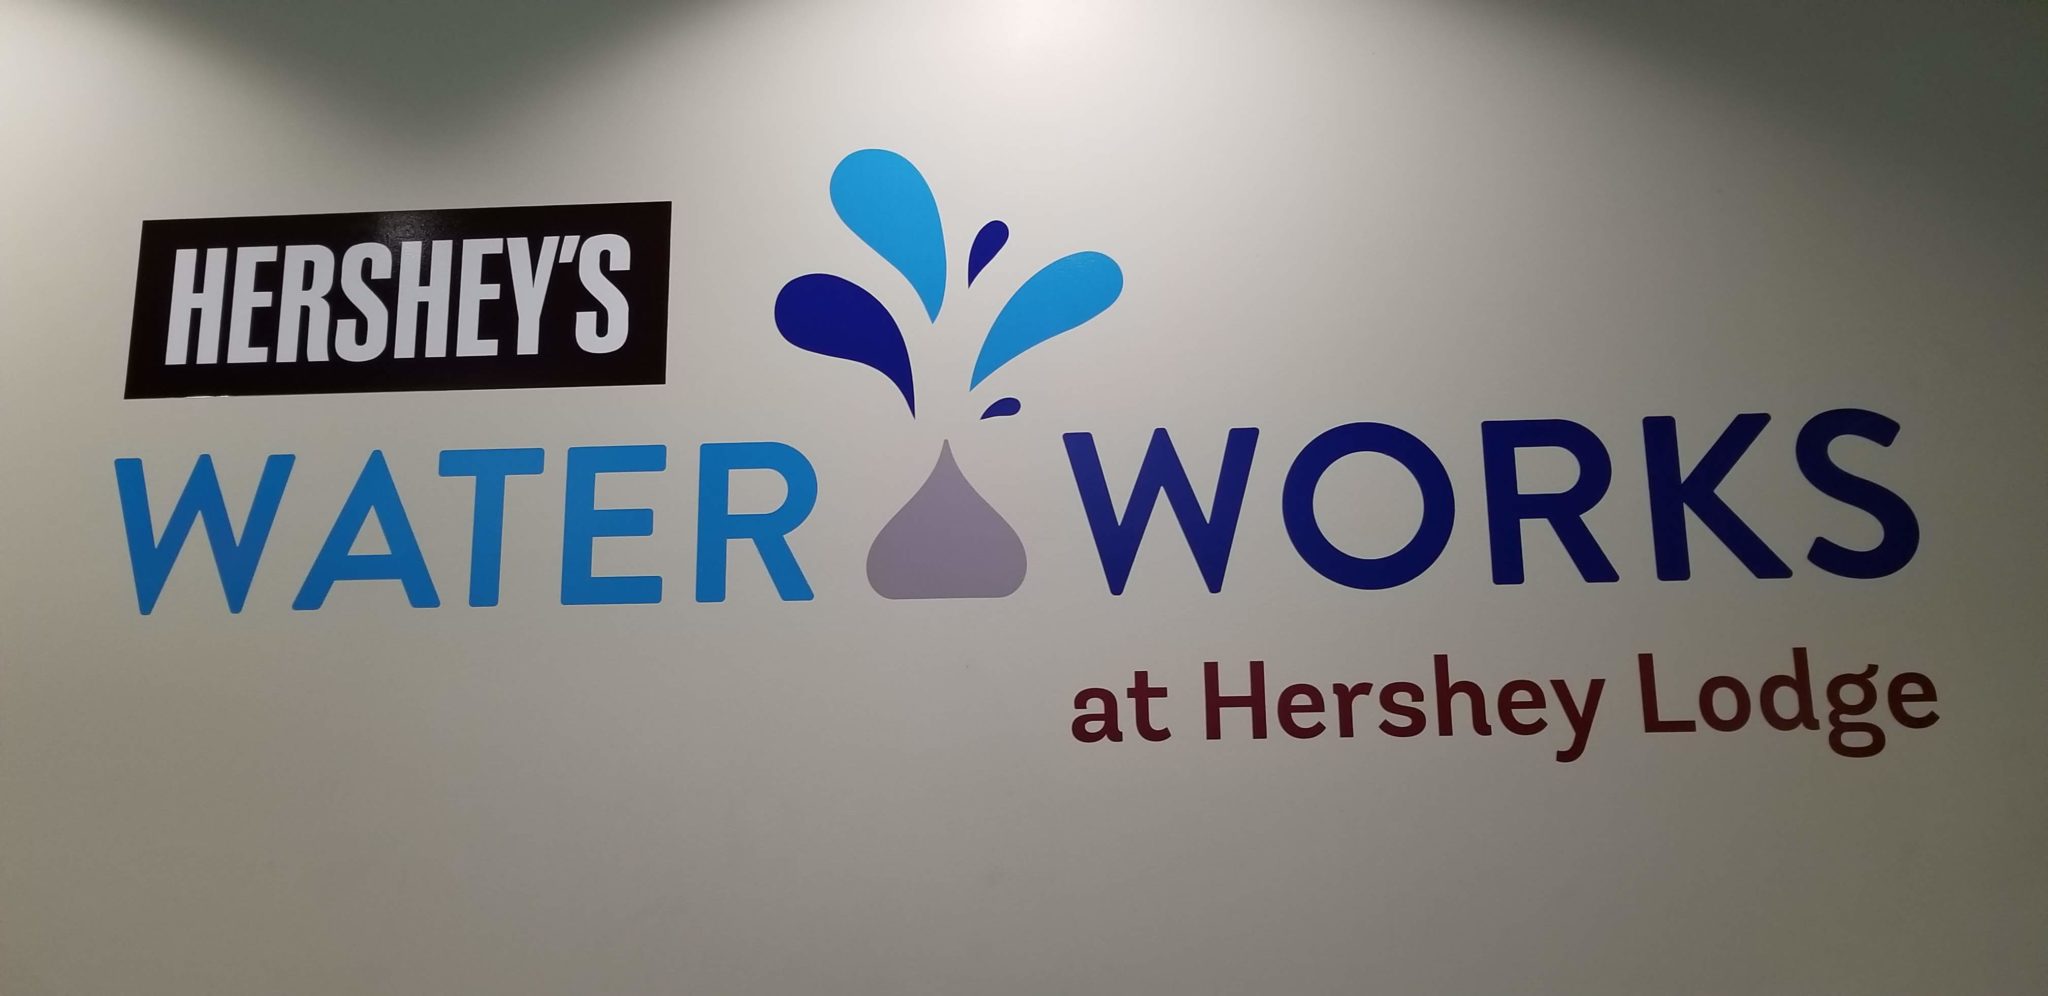 Hershey's Water Works at Hershey Lodge